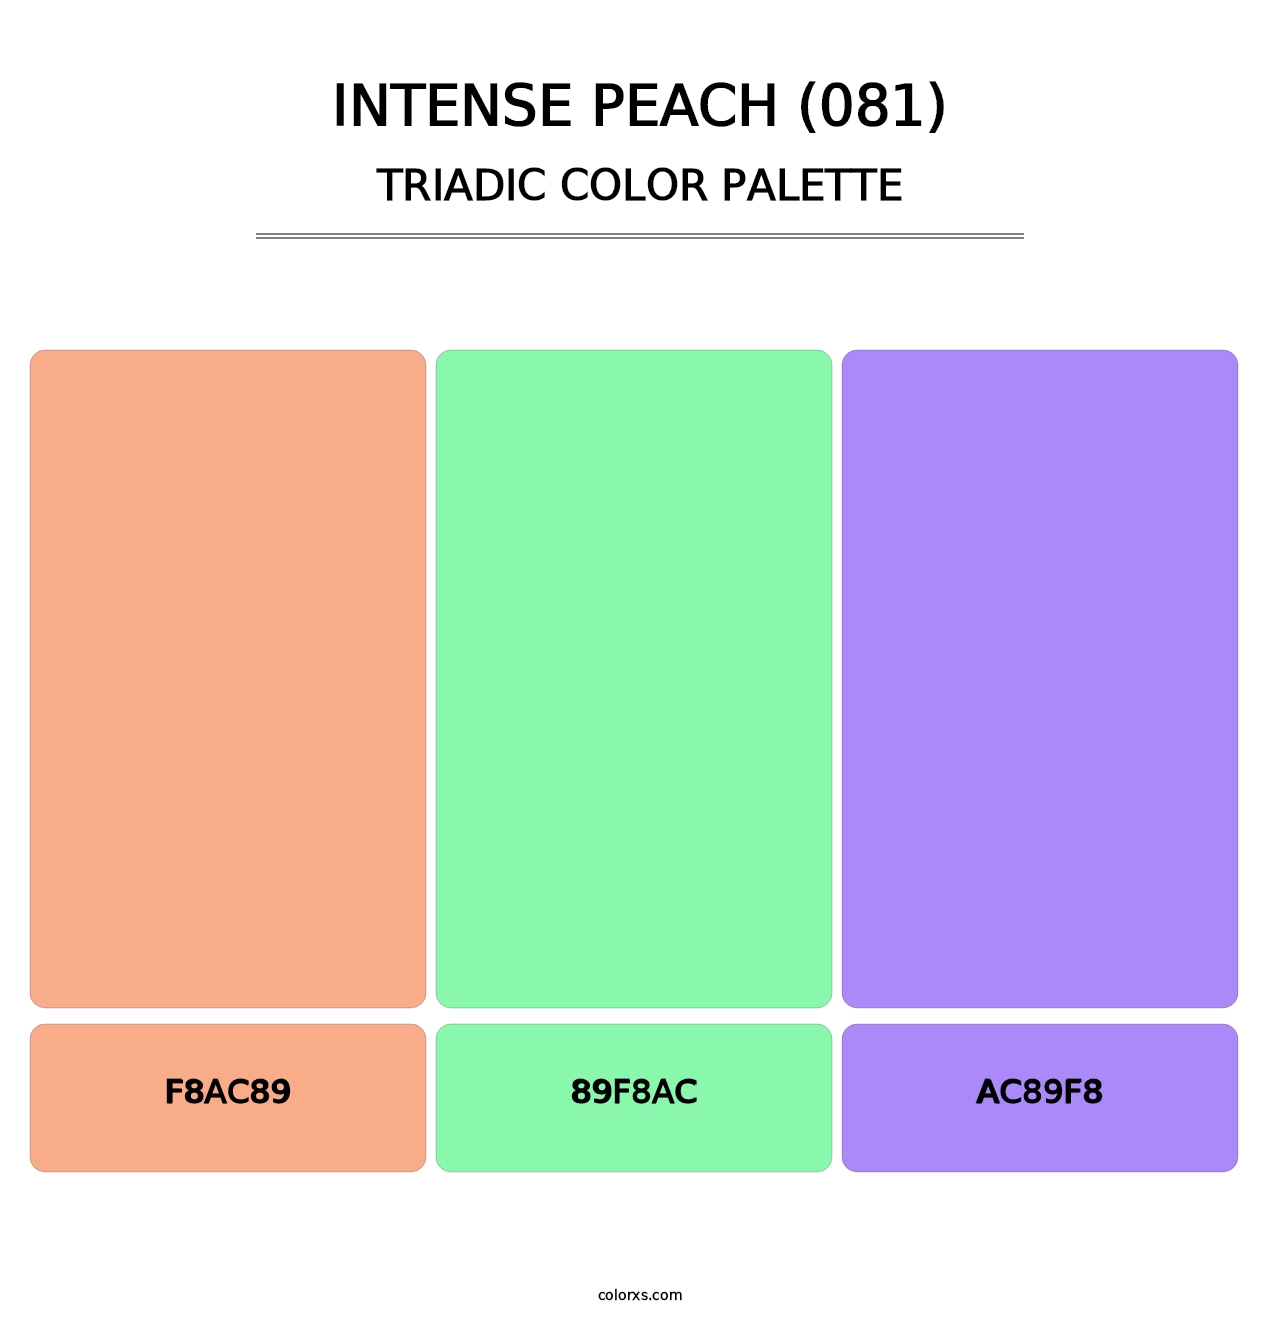 Intense Peach (081) - Triadic Color Palette